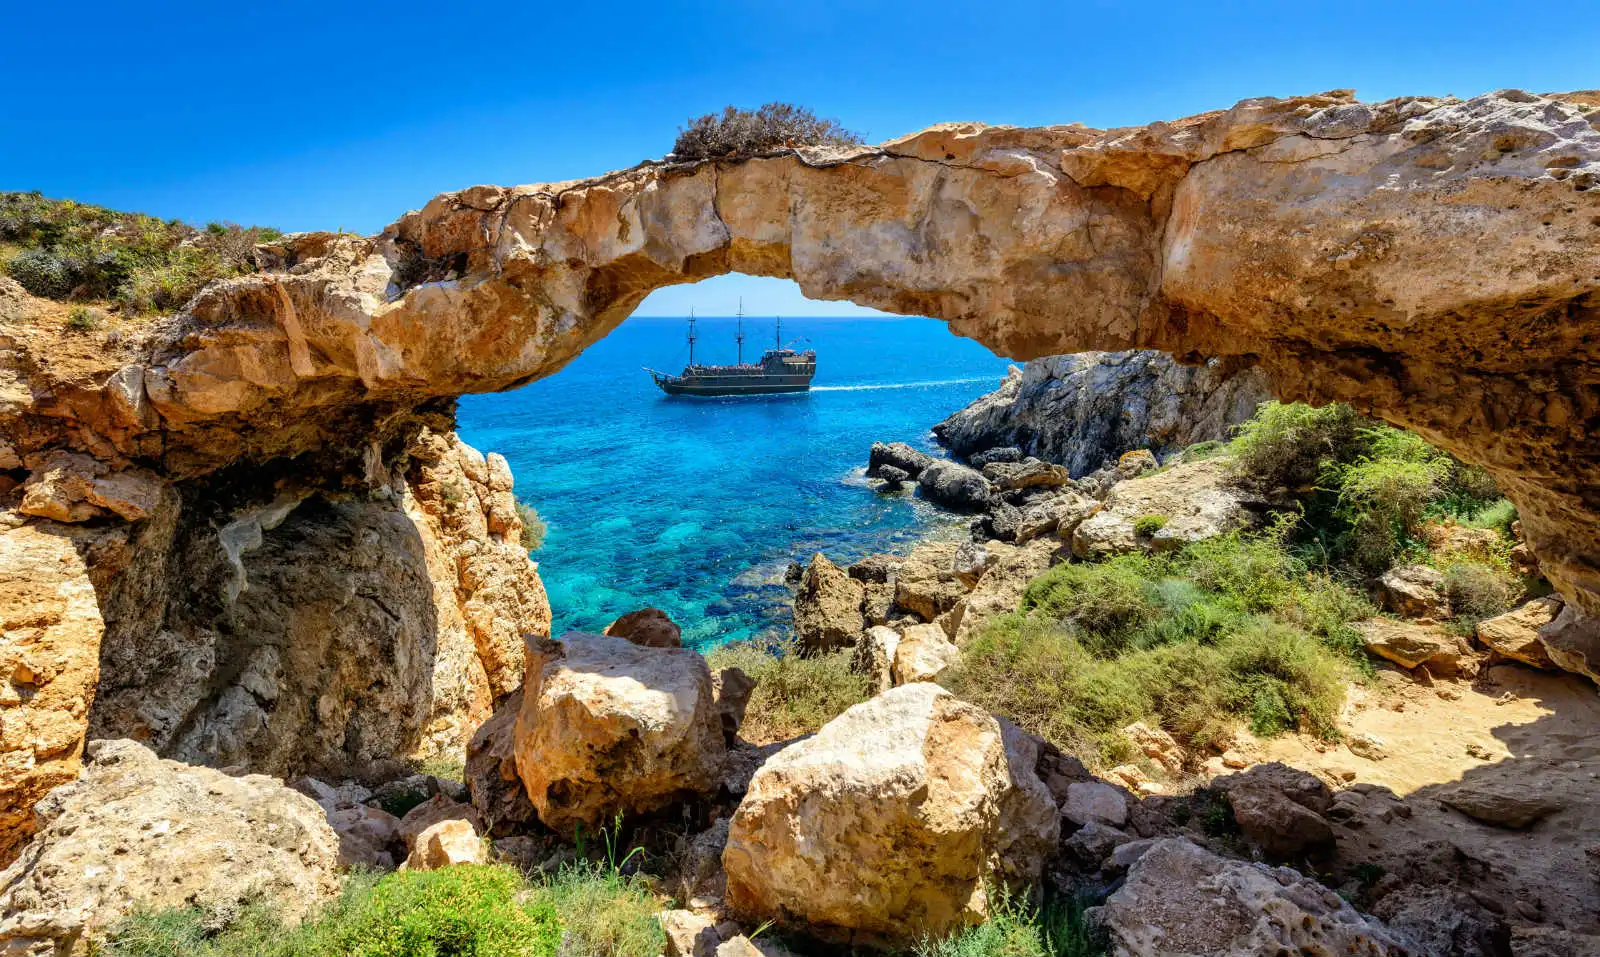 Cyprus tourism